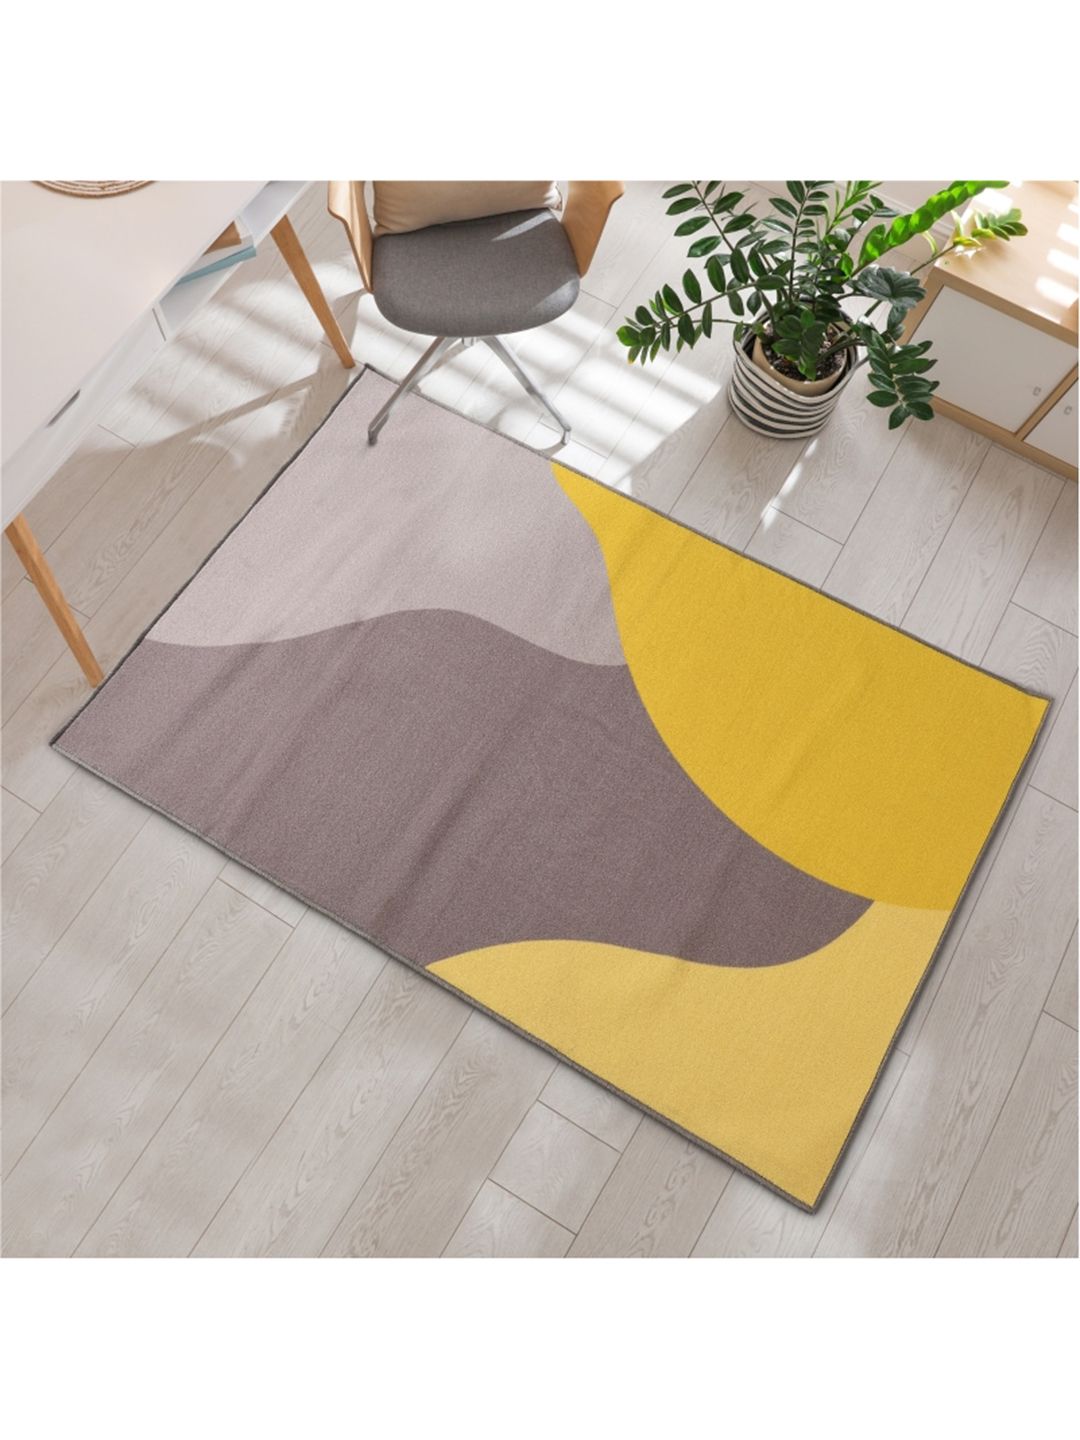 URBAN SPACE  Grey & Yellow Printed Anti-Skid Carpet Price in India